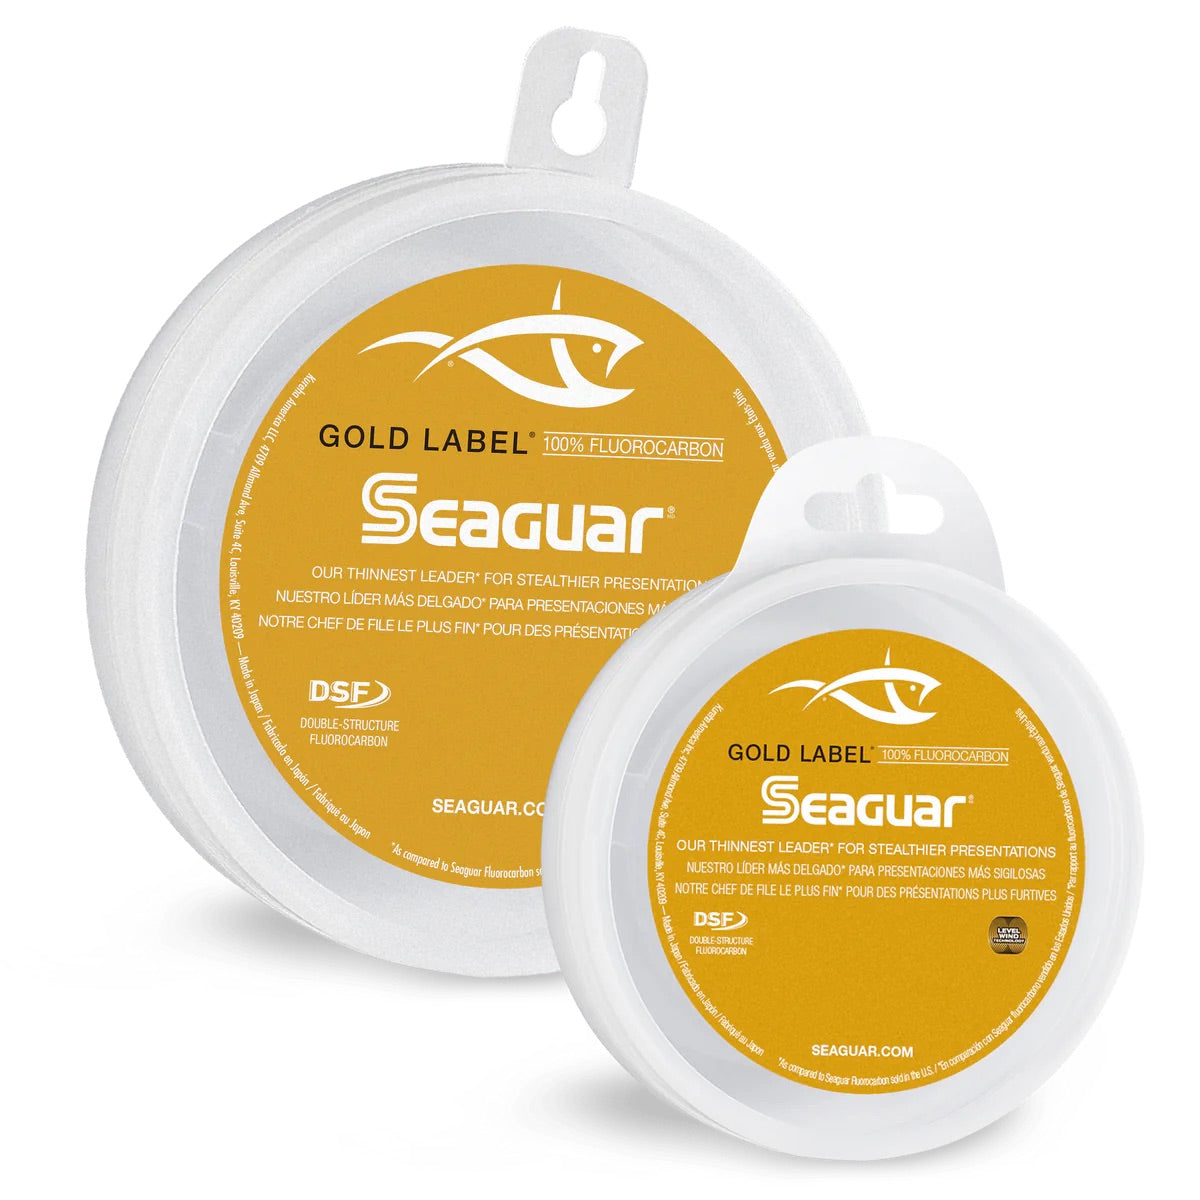 Seaguar - Gold Label Fluorocarbon - 25yd Spools